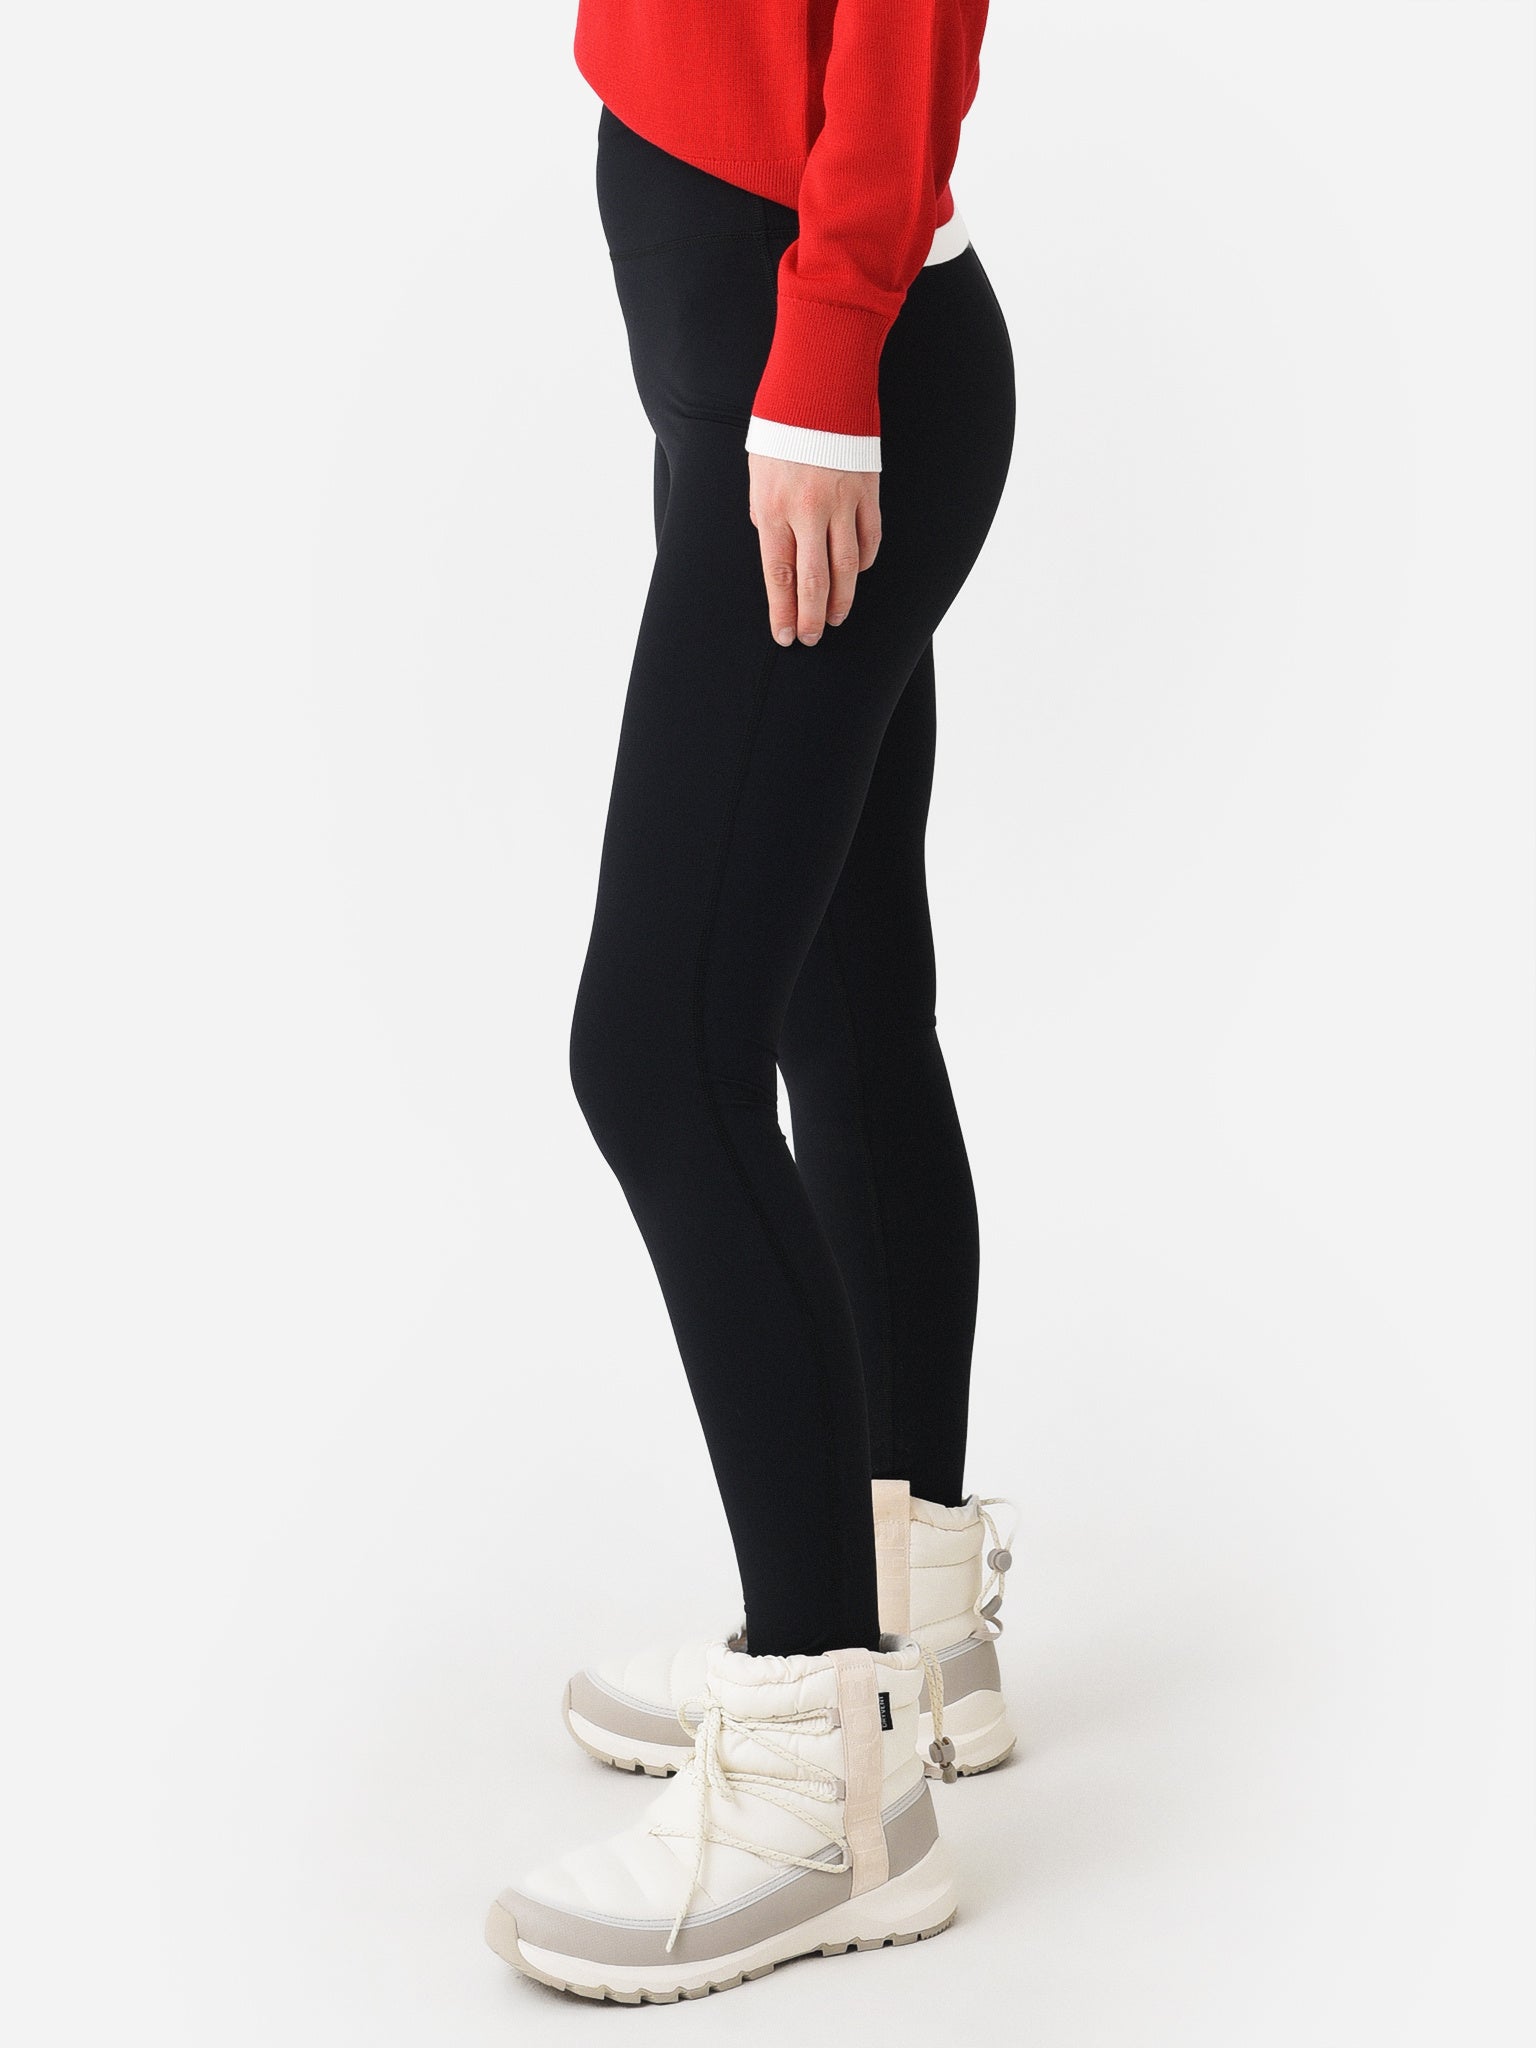 Erin Snow Peri Legging in Black